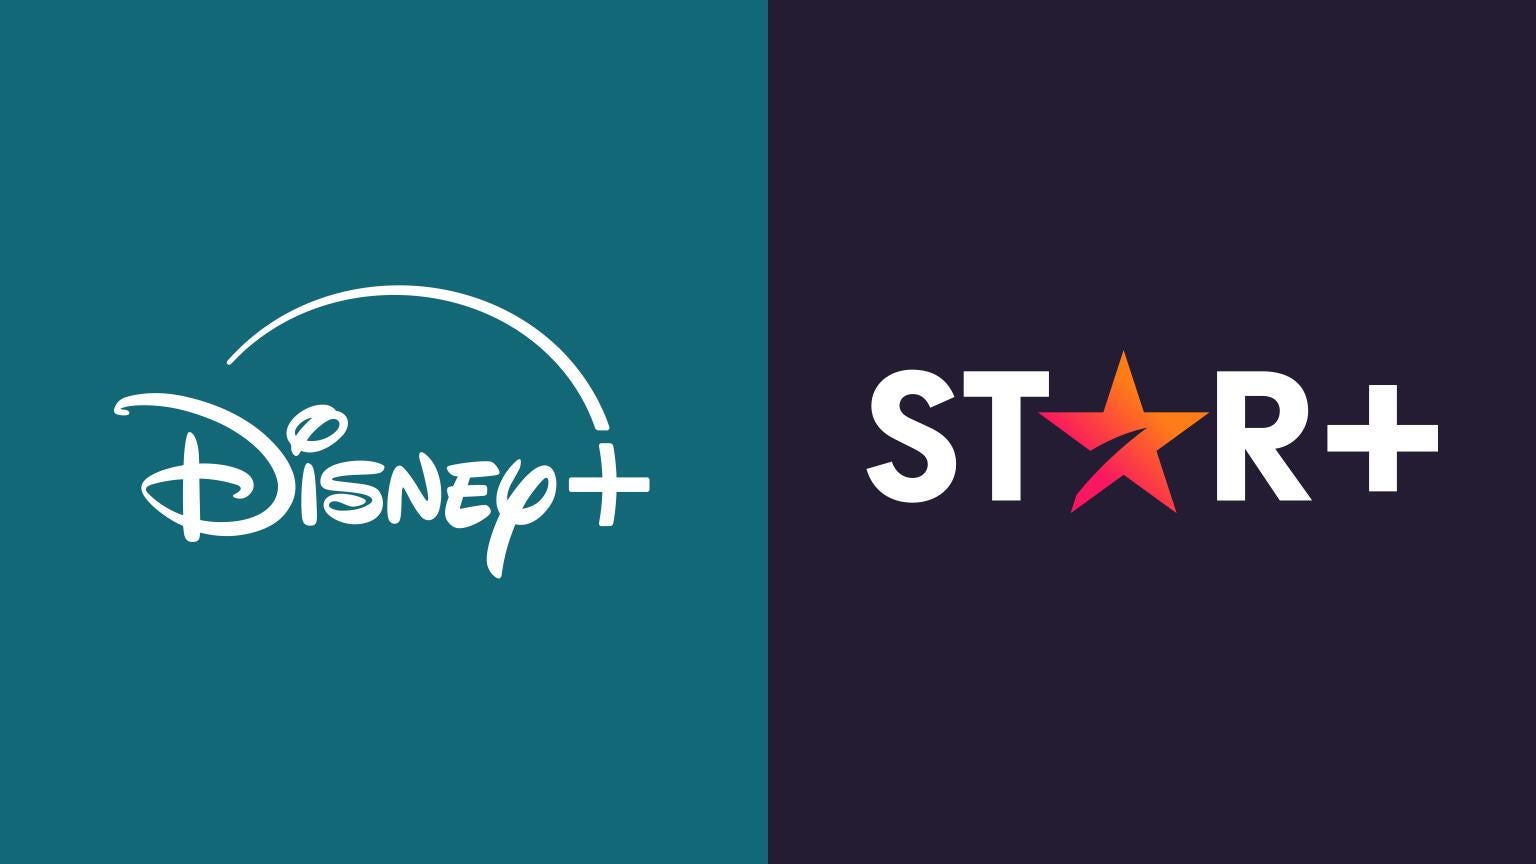 Disney+ will absorb Star+ titles on June 26, ahead of Star+'s shutdown in July.